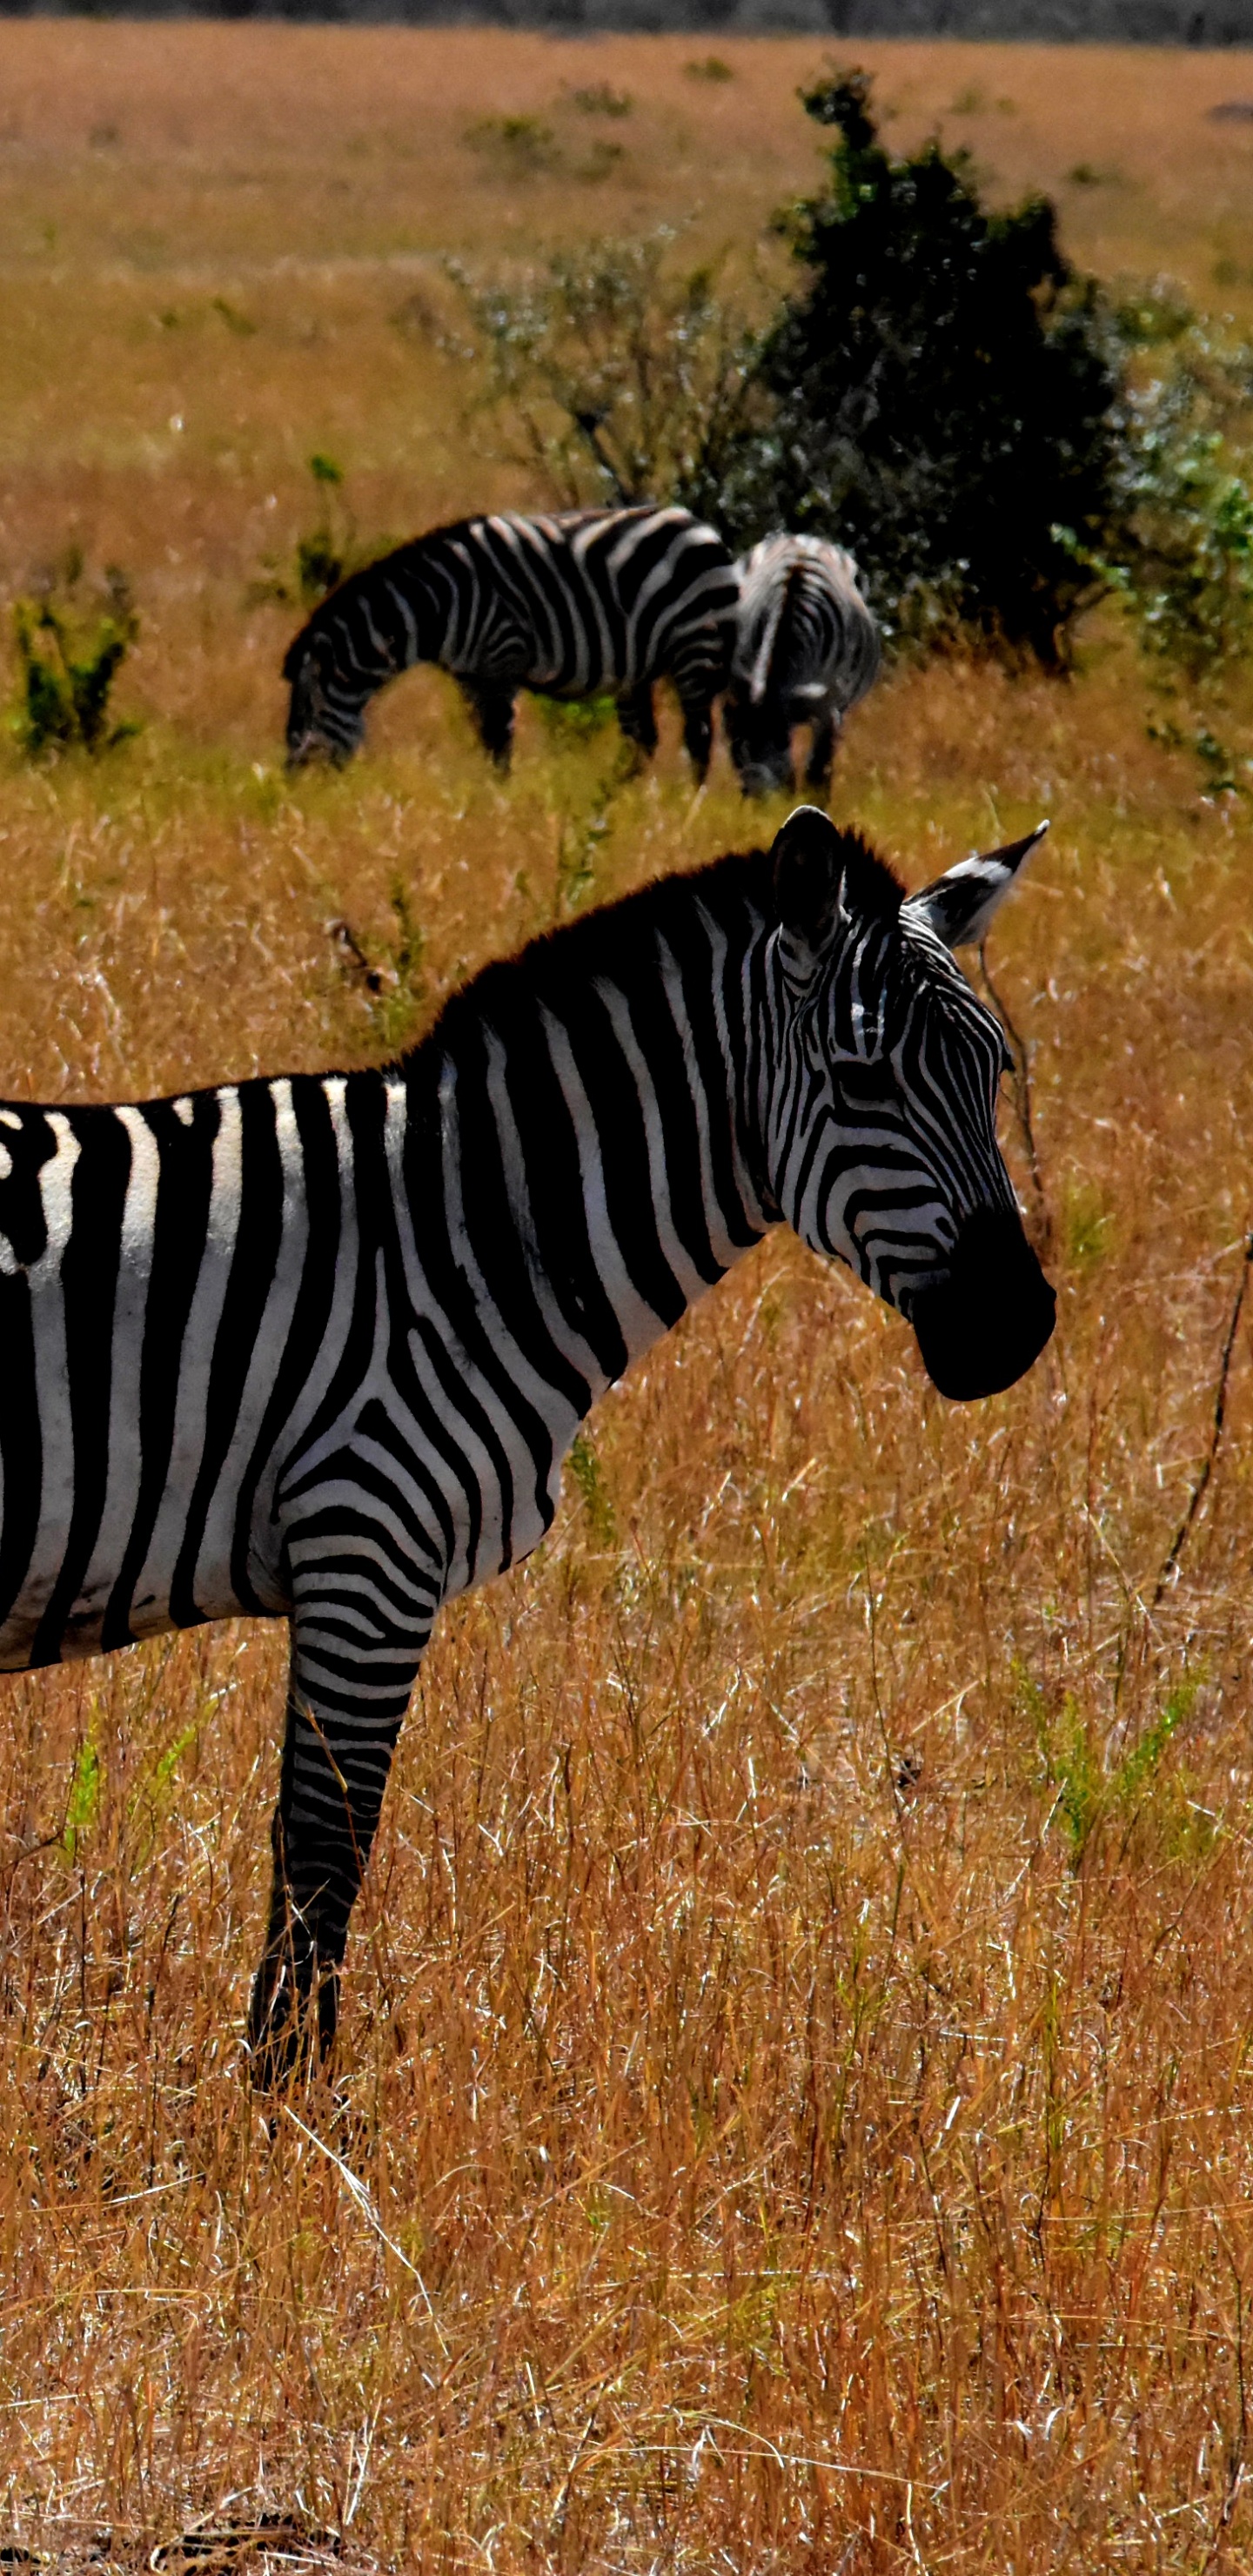 Zebra on Brown Grass Field During Daytime. Wallpaper in 1440x2960 Resolution